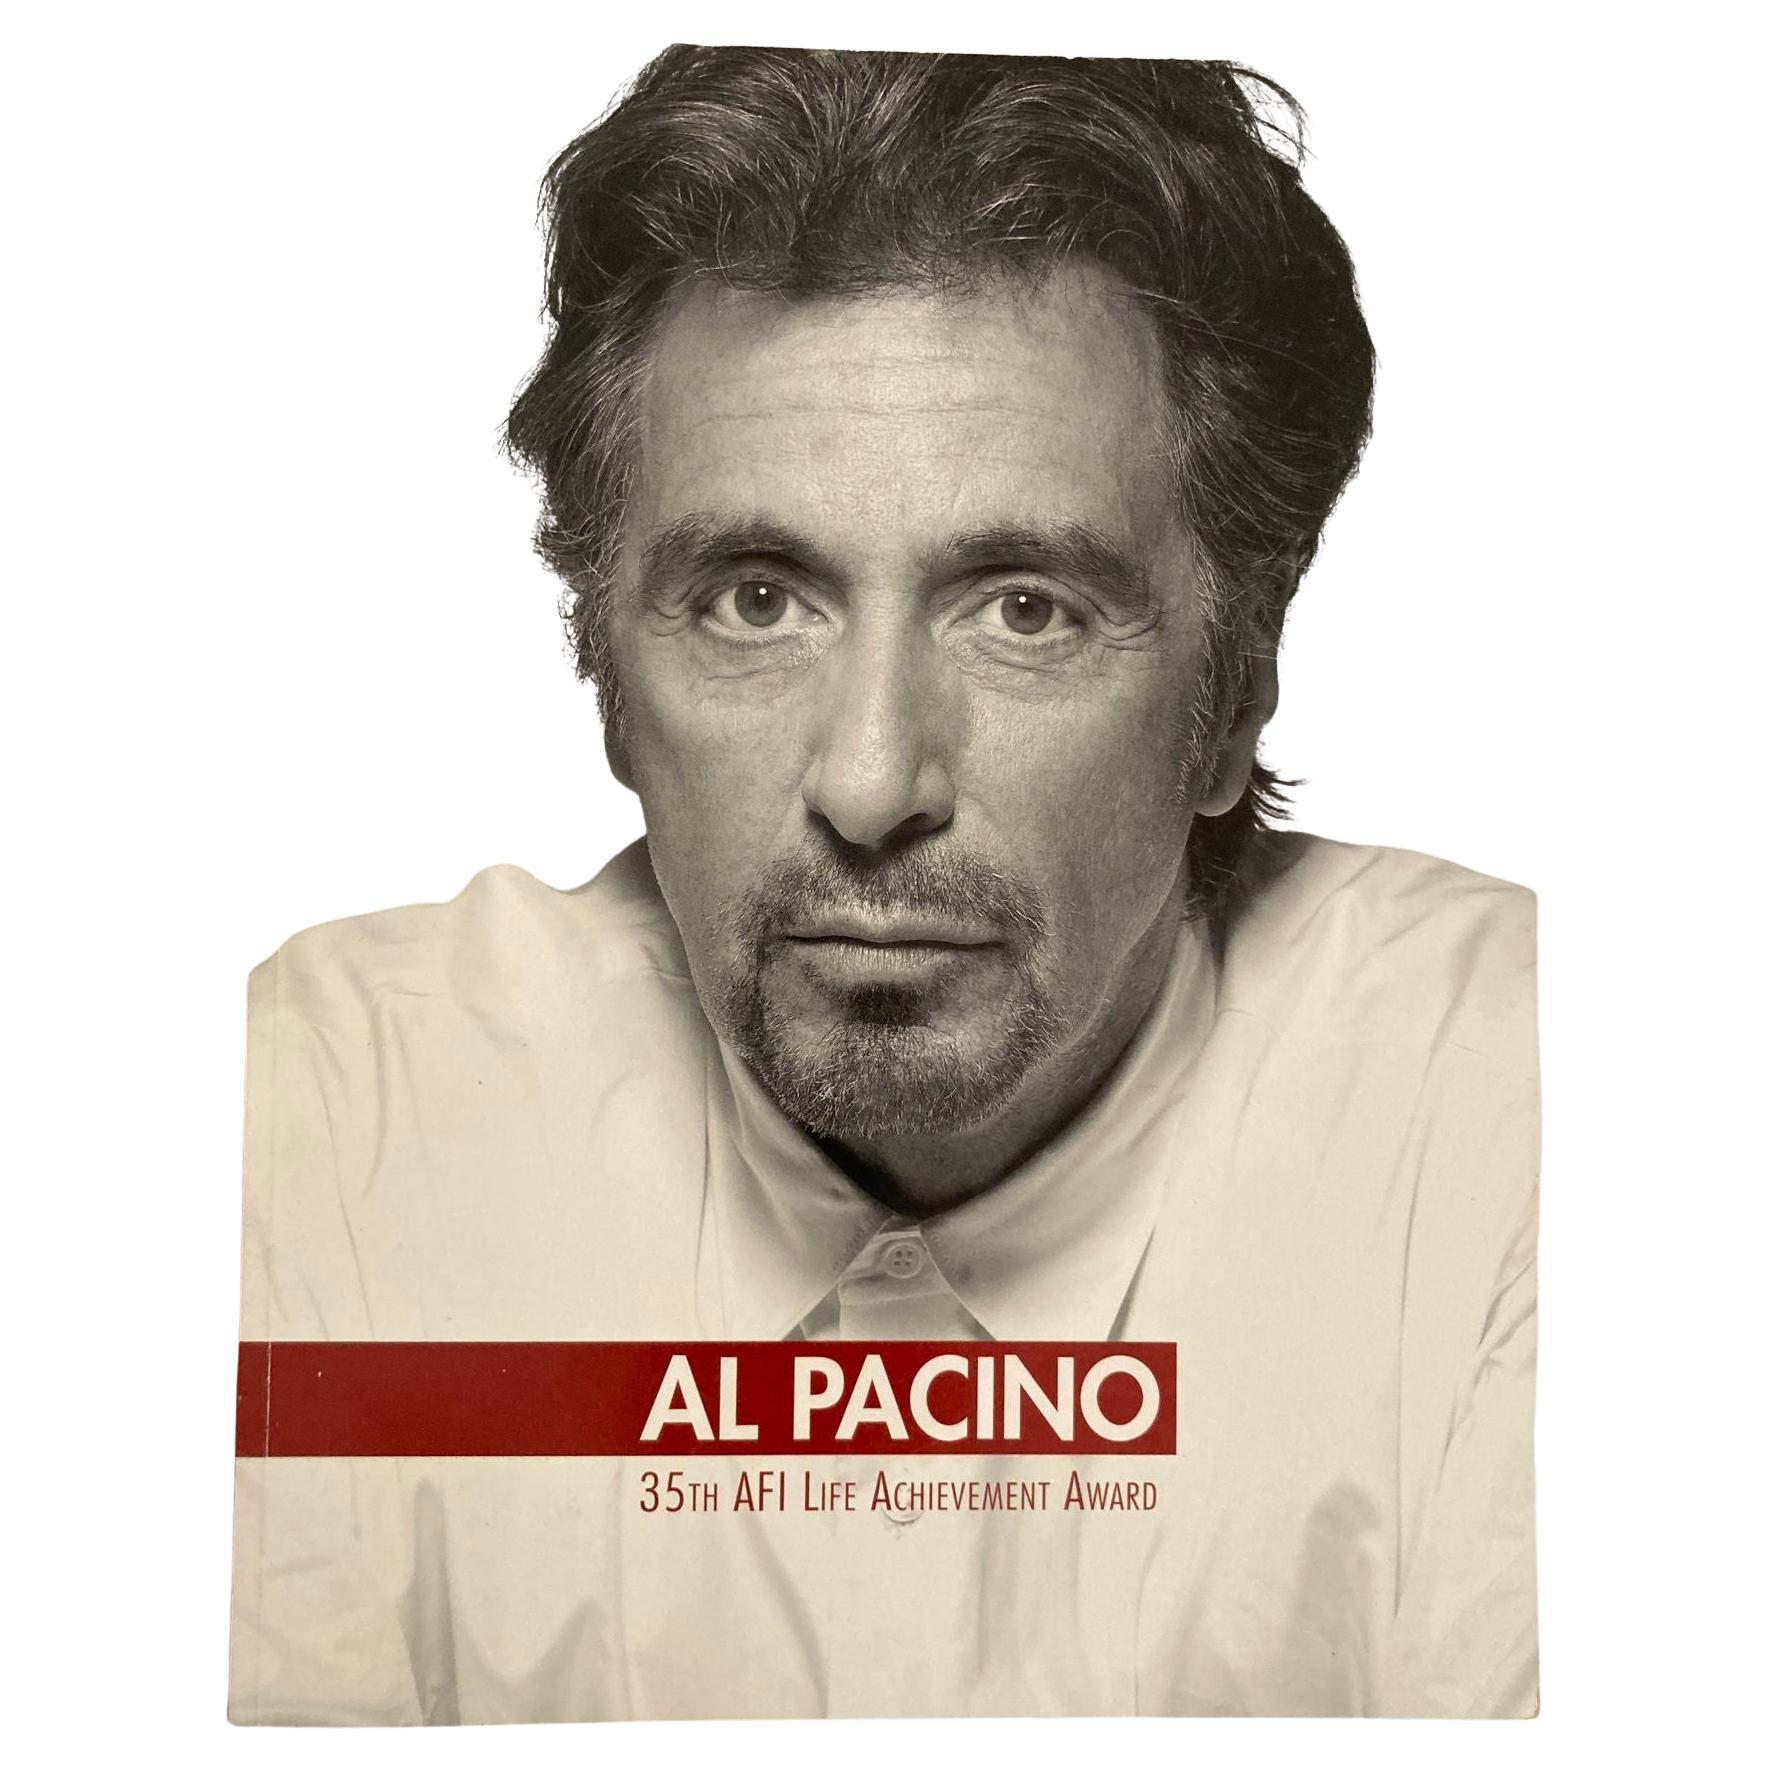 Al Pacino: 35th Afi Life Achievement Award Paperback Book 2007 For Sale